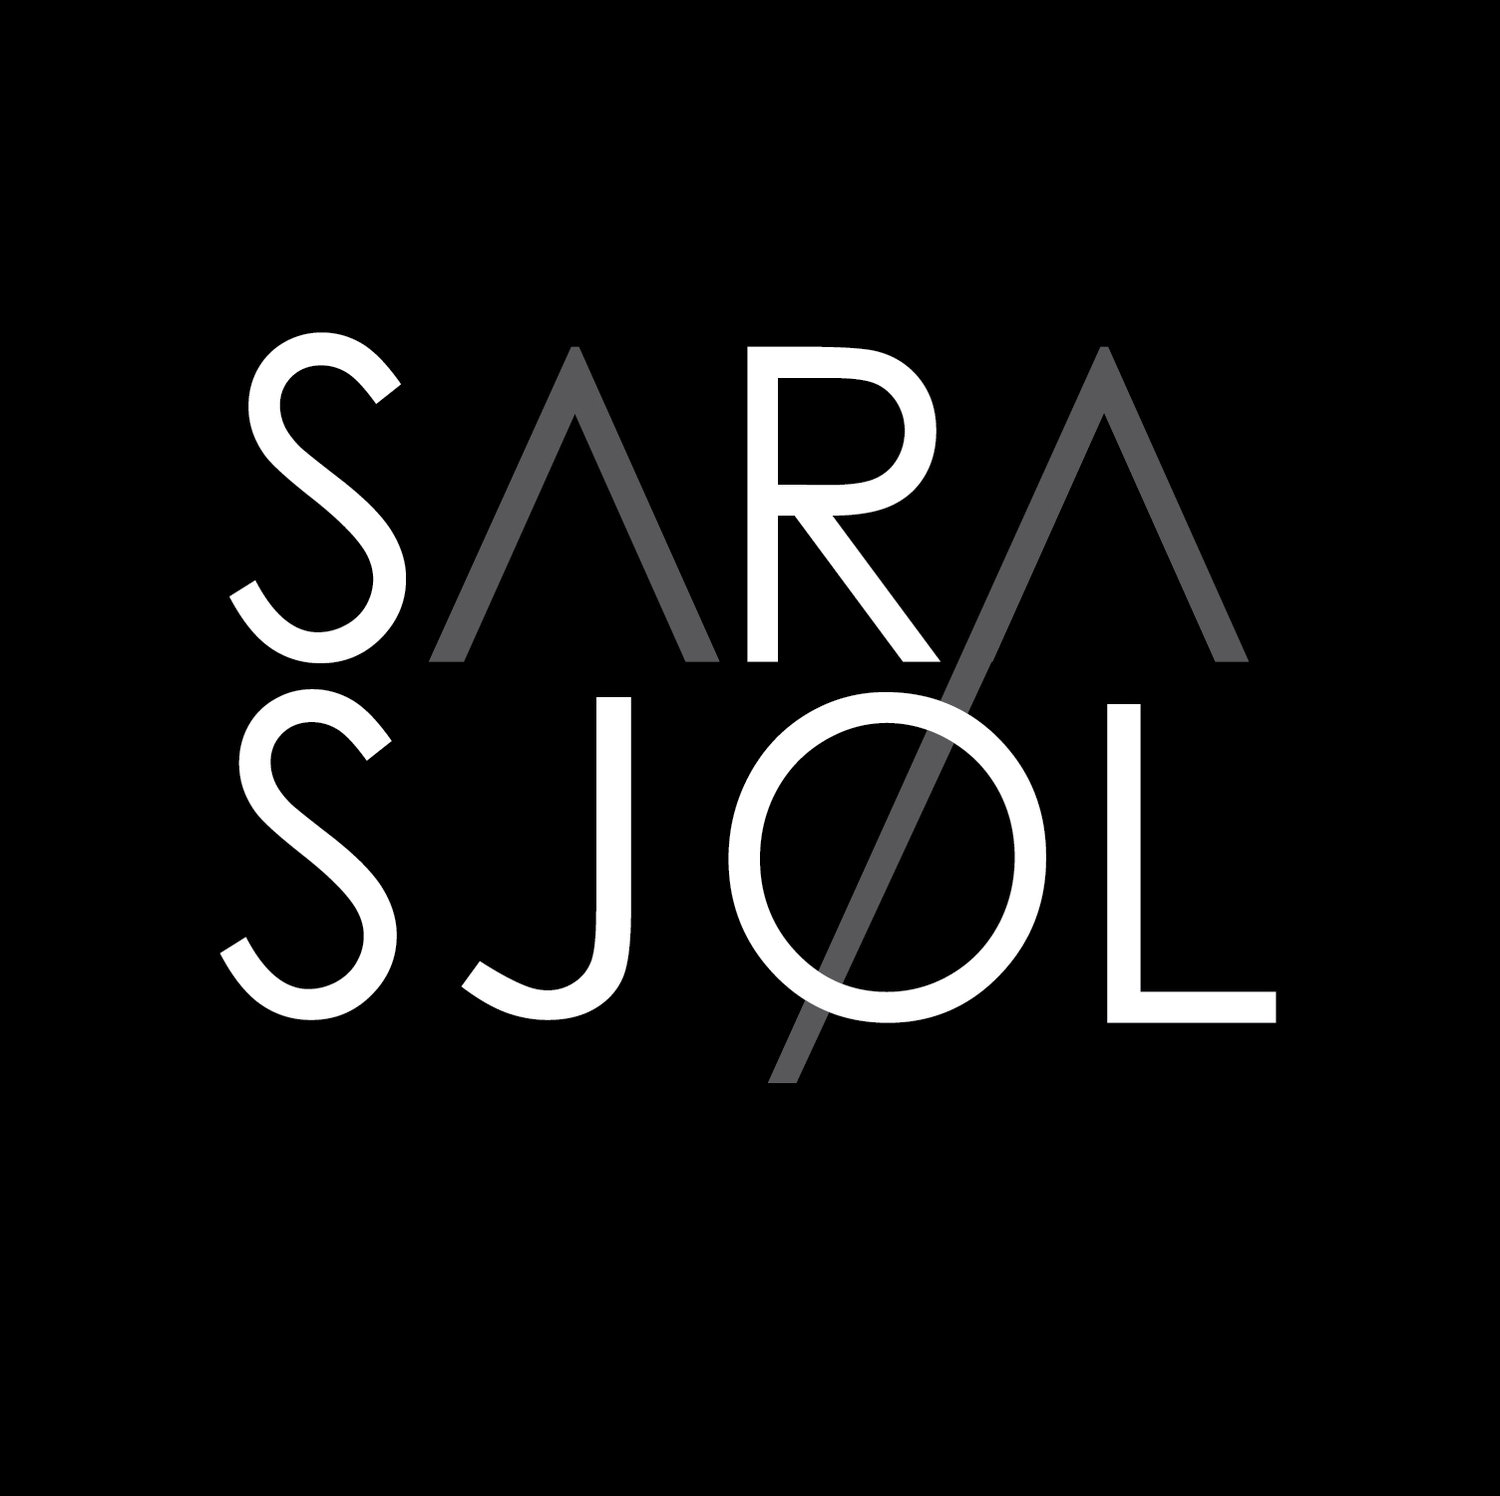 SARA SJOL, ARTIST 